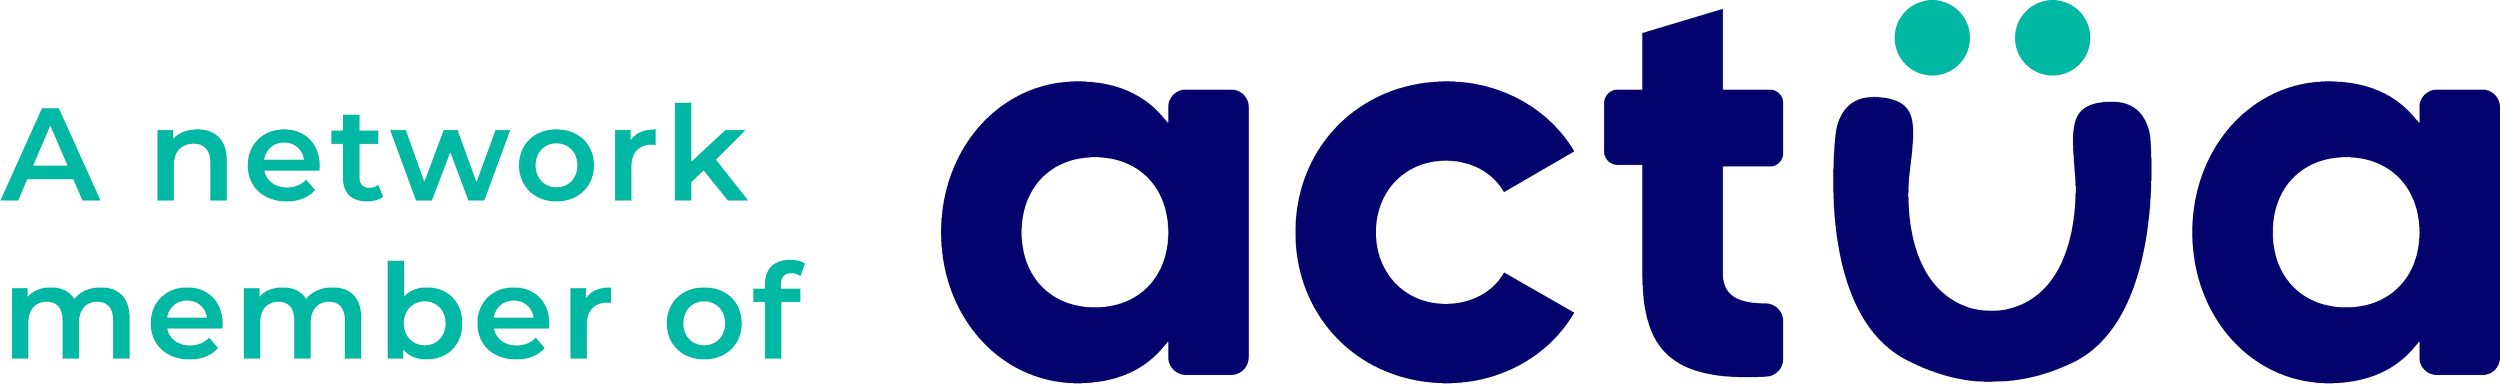 Actua_NetworkMember_Logo_Cobalt_English